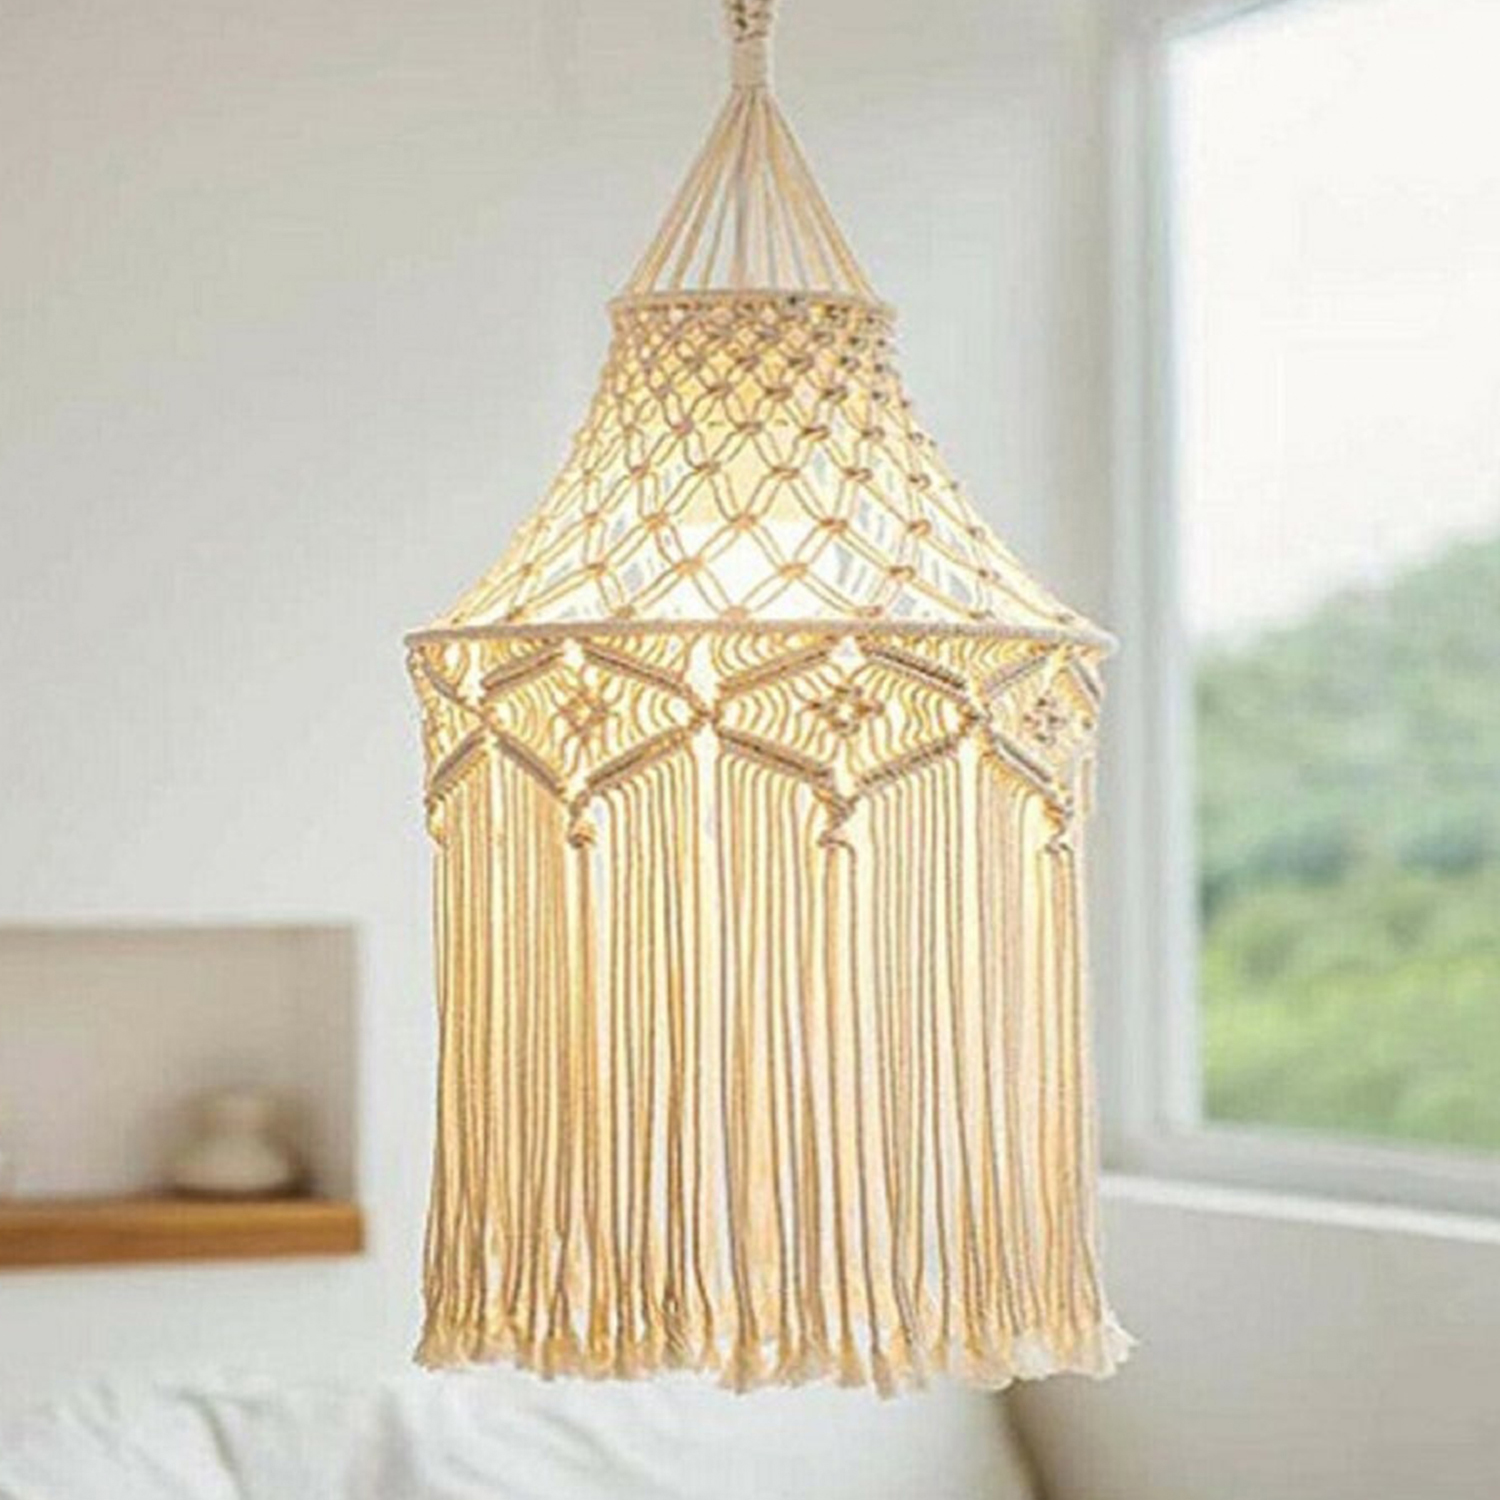 macrame bohemian chandelier ceiling pendant lamp manufacturer, exporter and supplier